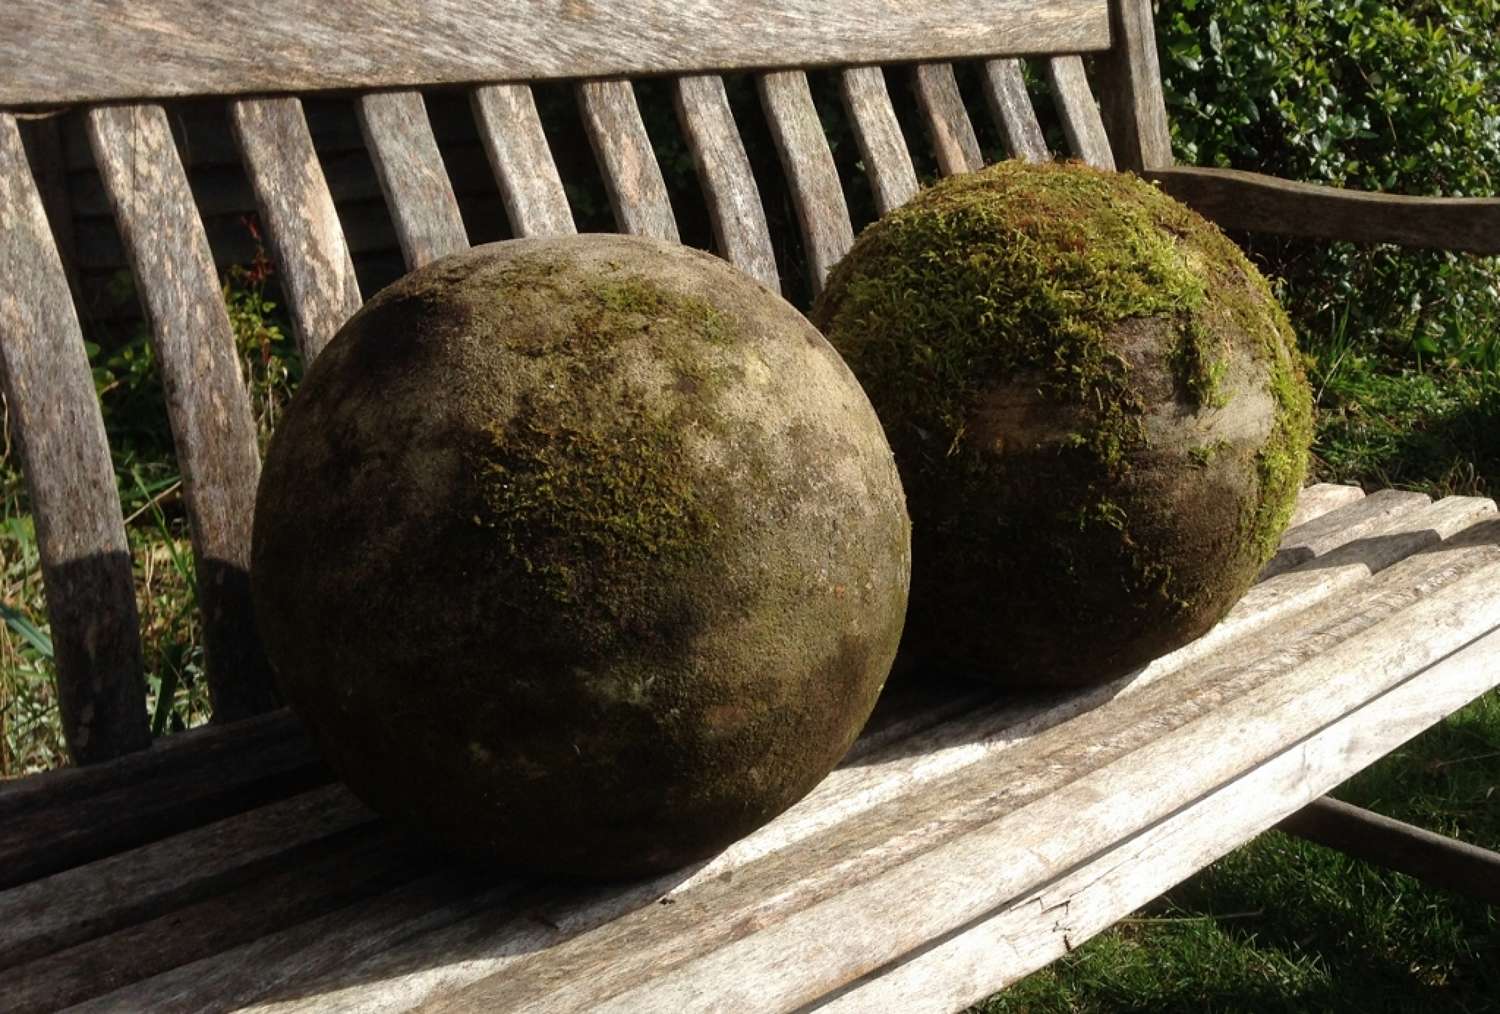 Pair of Mossy Balls